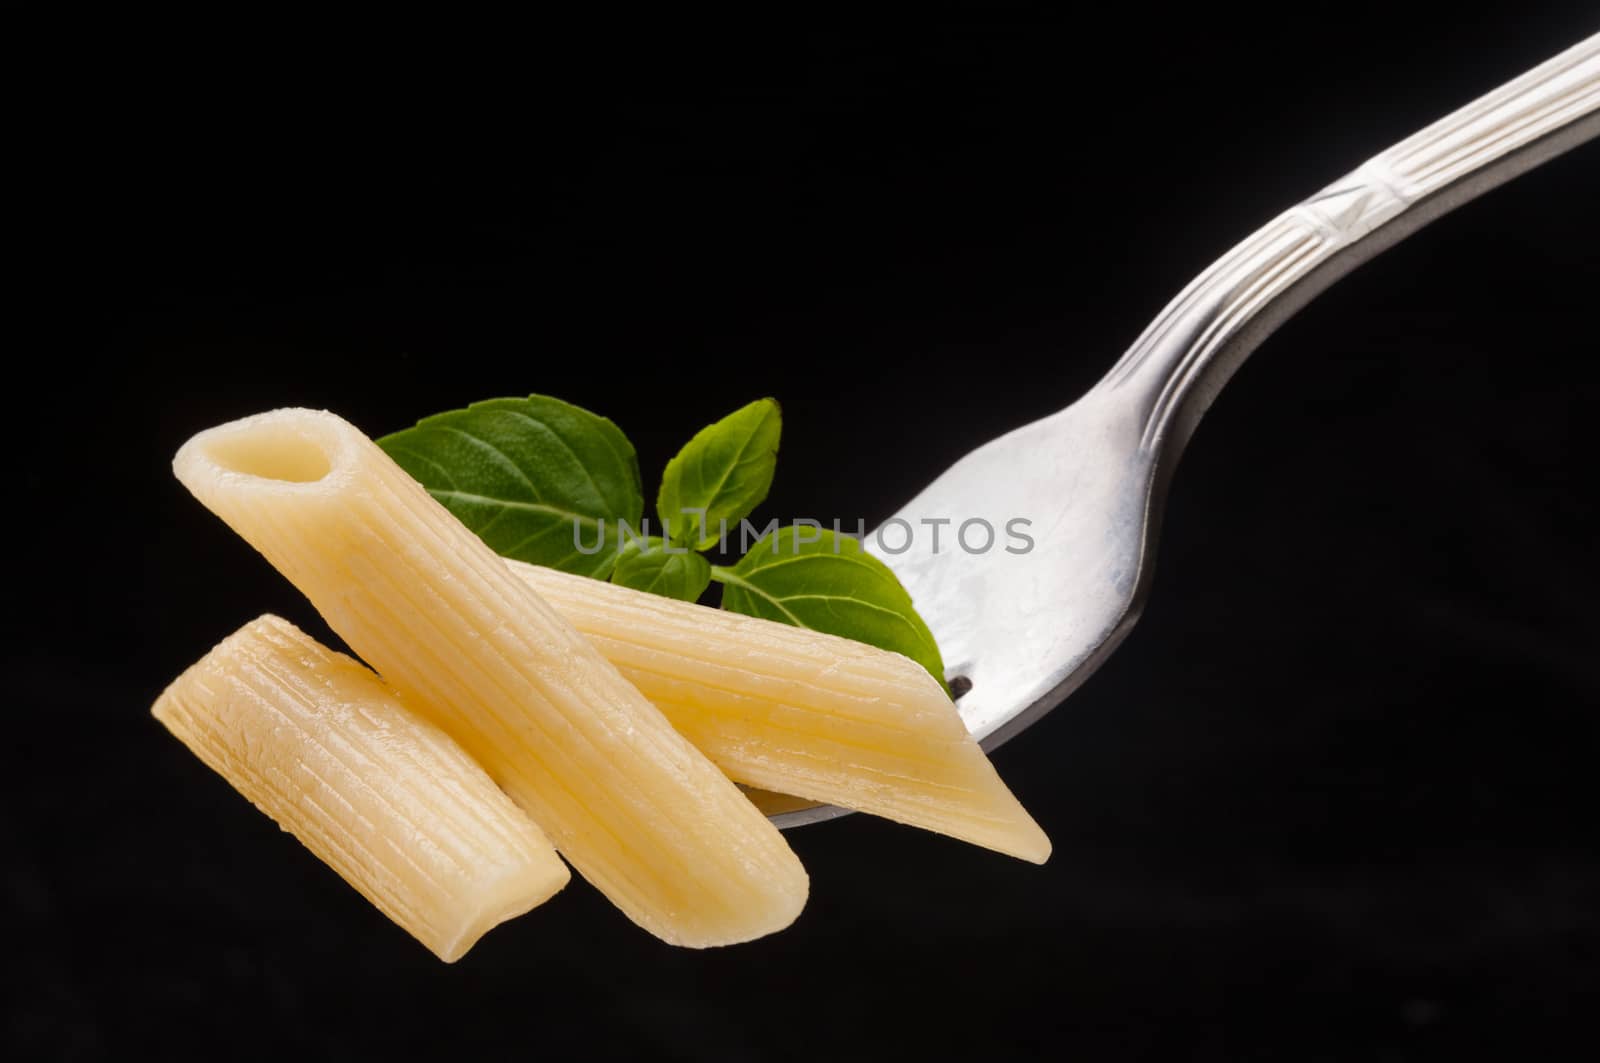 Pasta on the work by Angorius